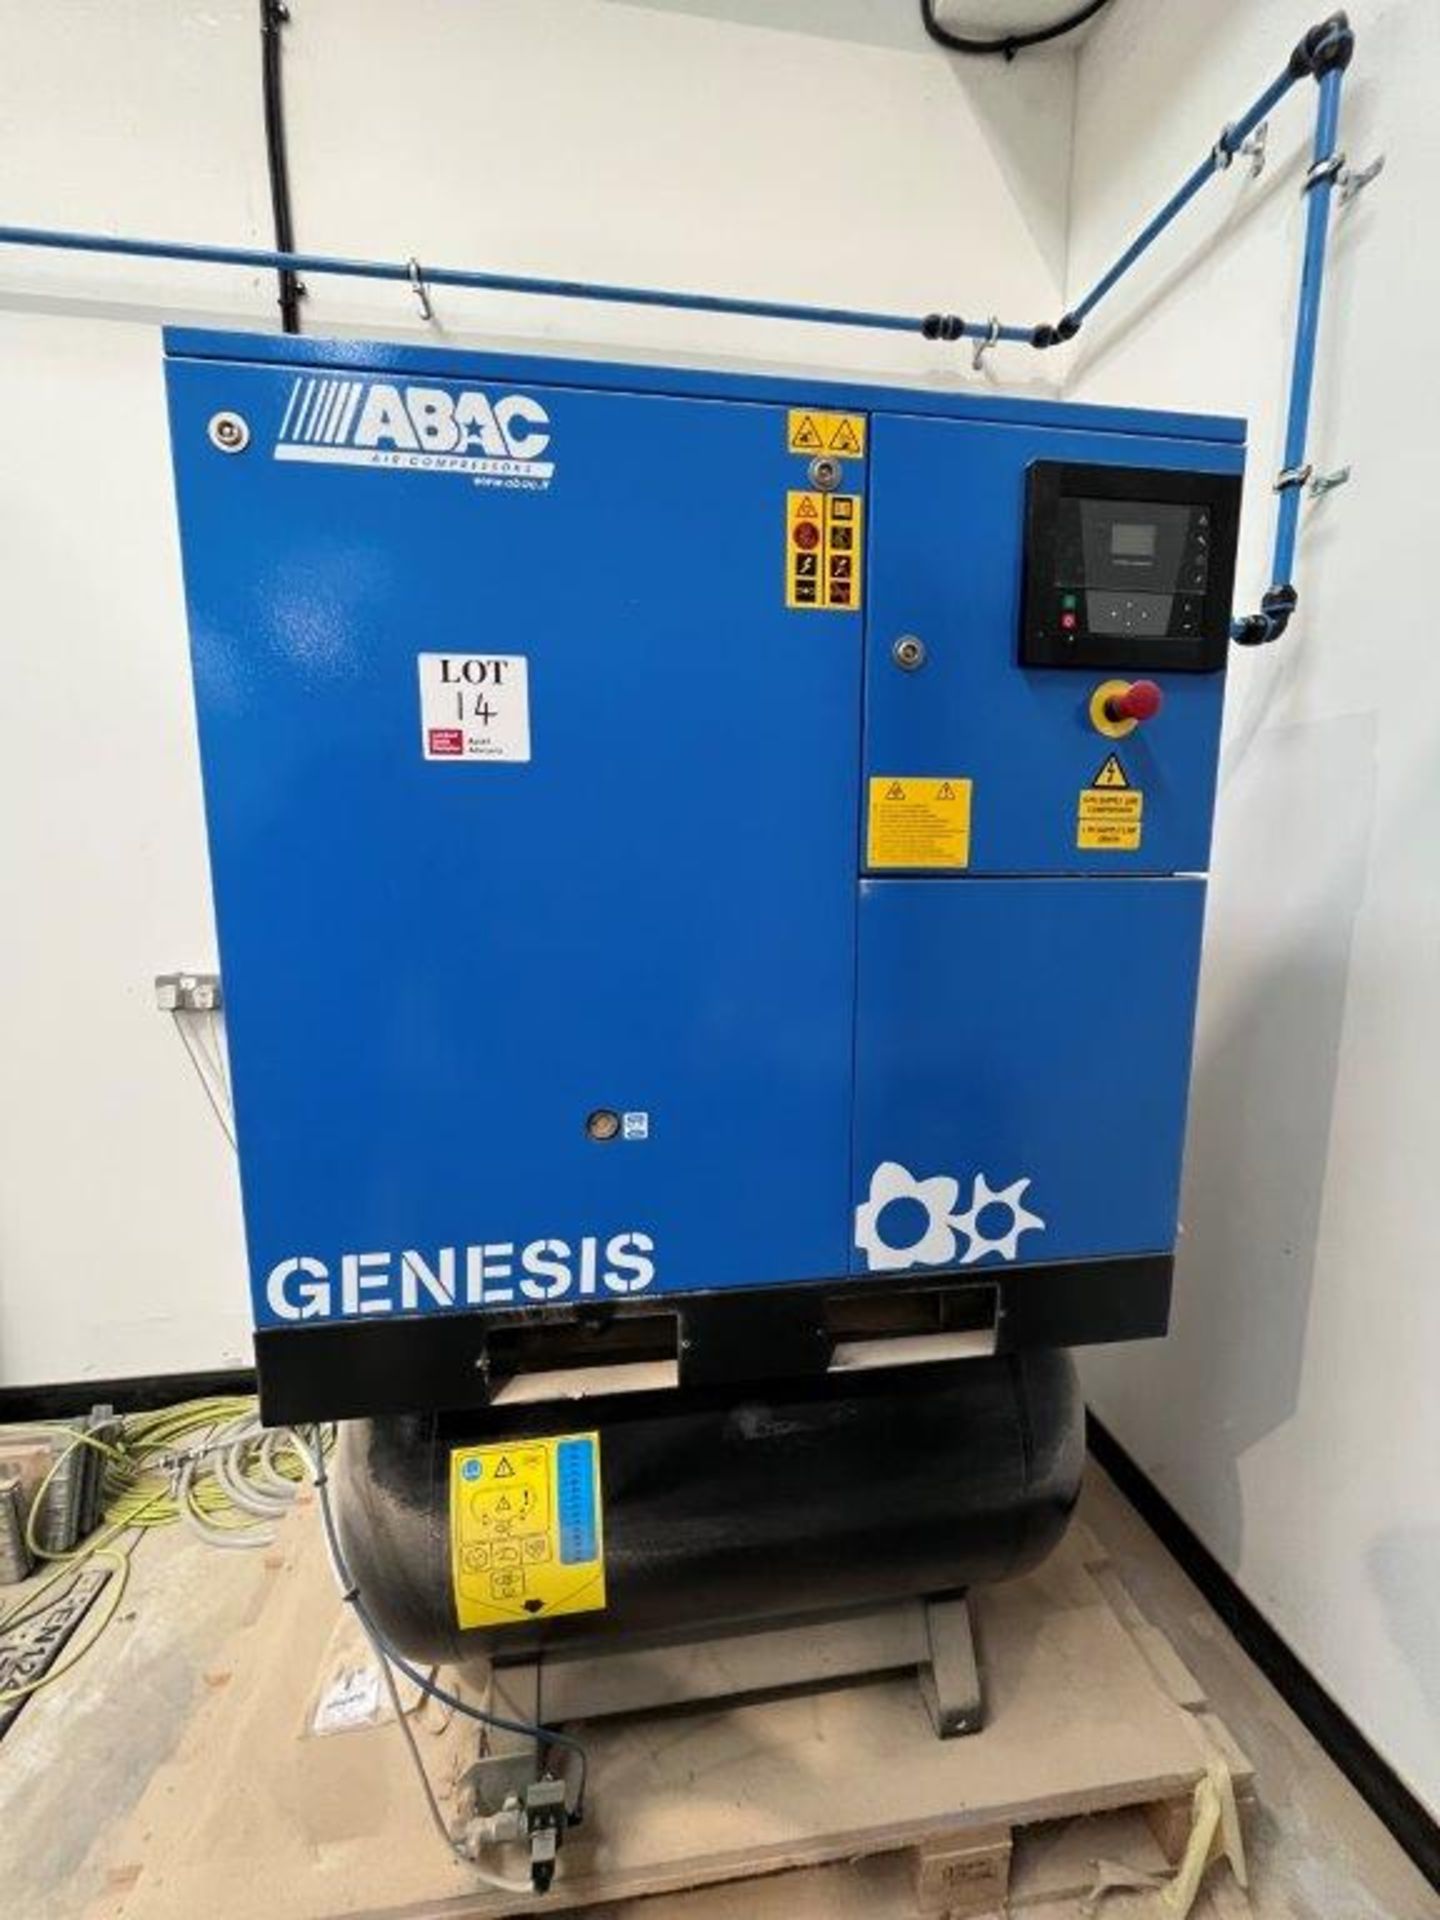 2021 Abac Genesis 11 rotary screw air compressor